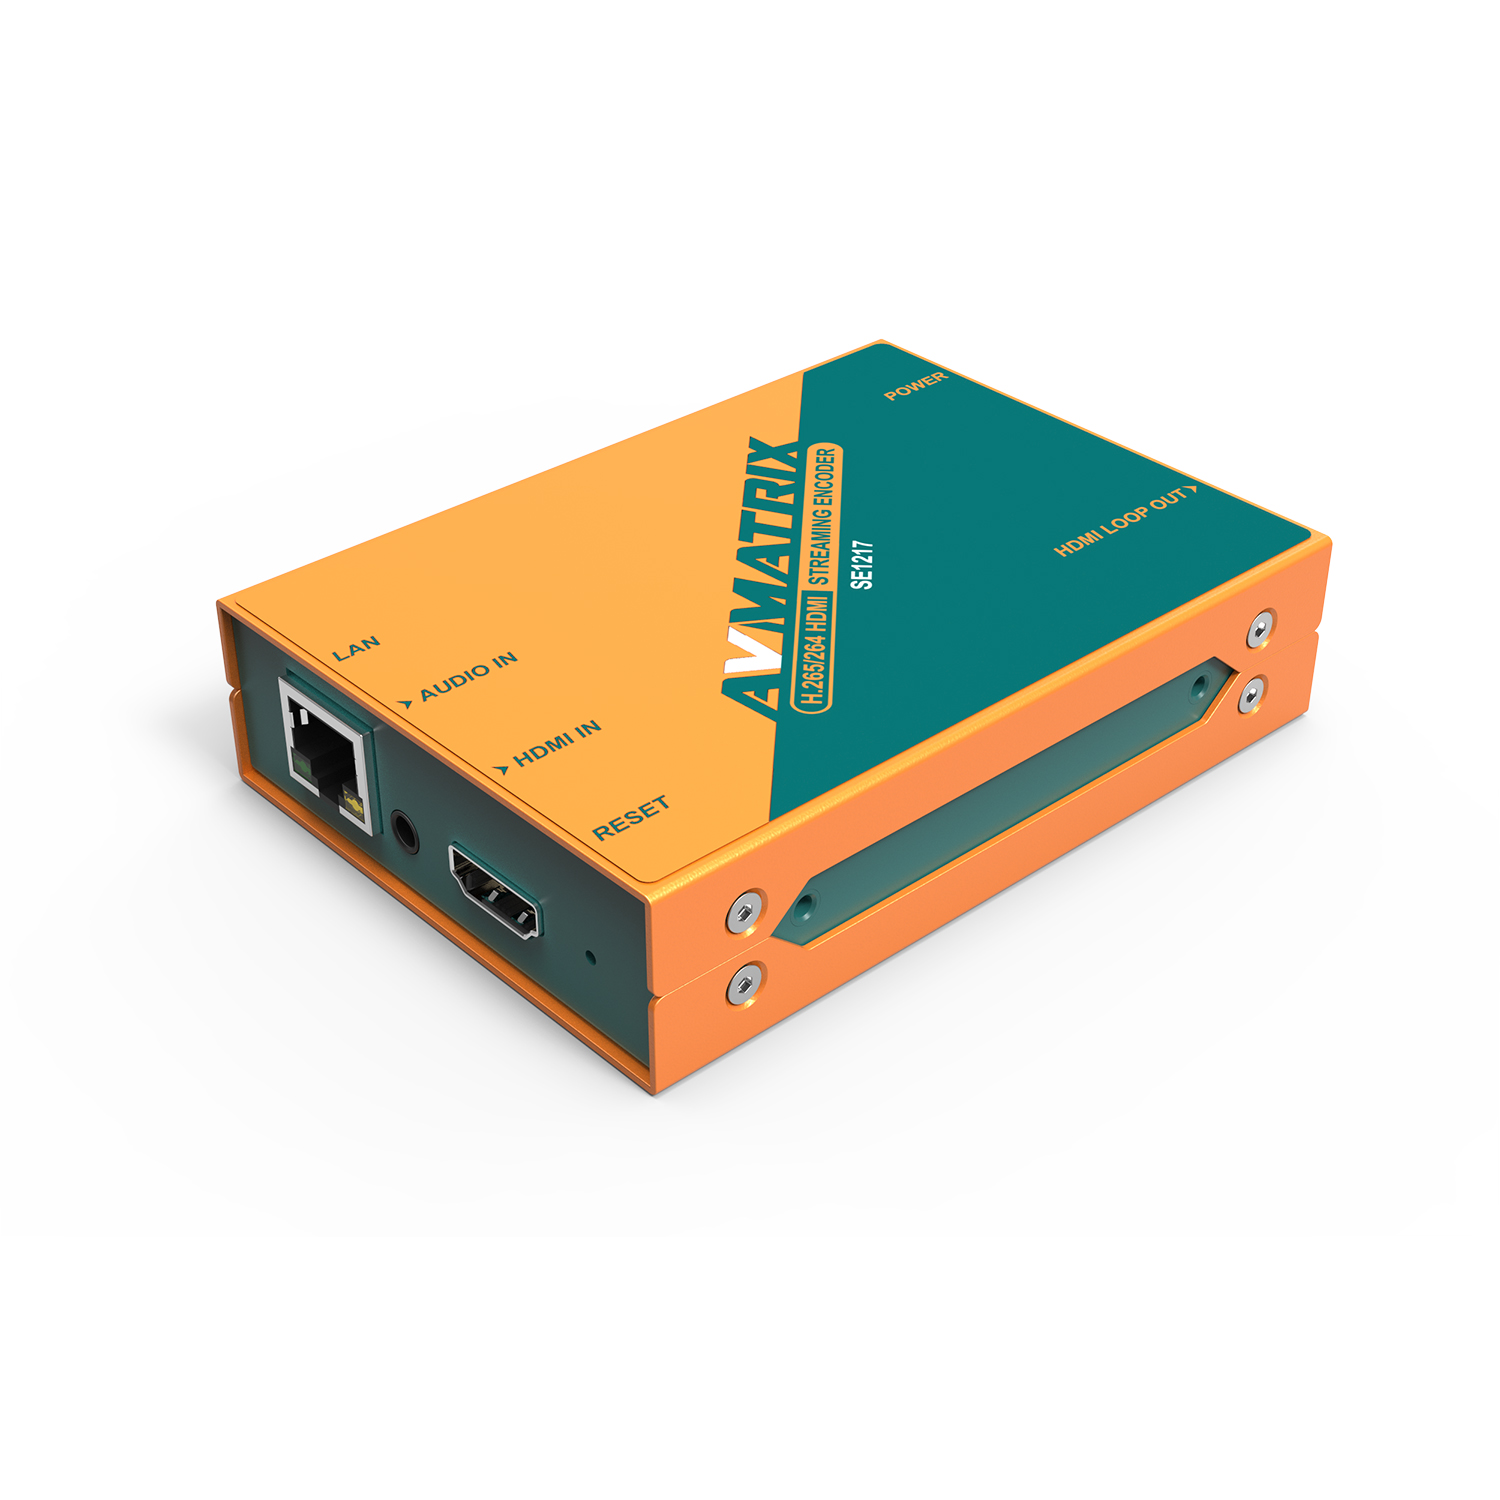 SE1217 – H.265/264 HDMI Streaming Encoder